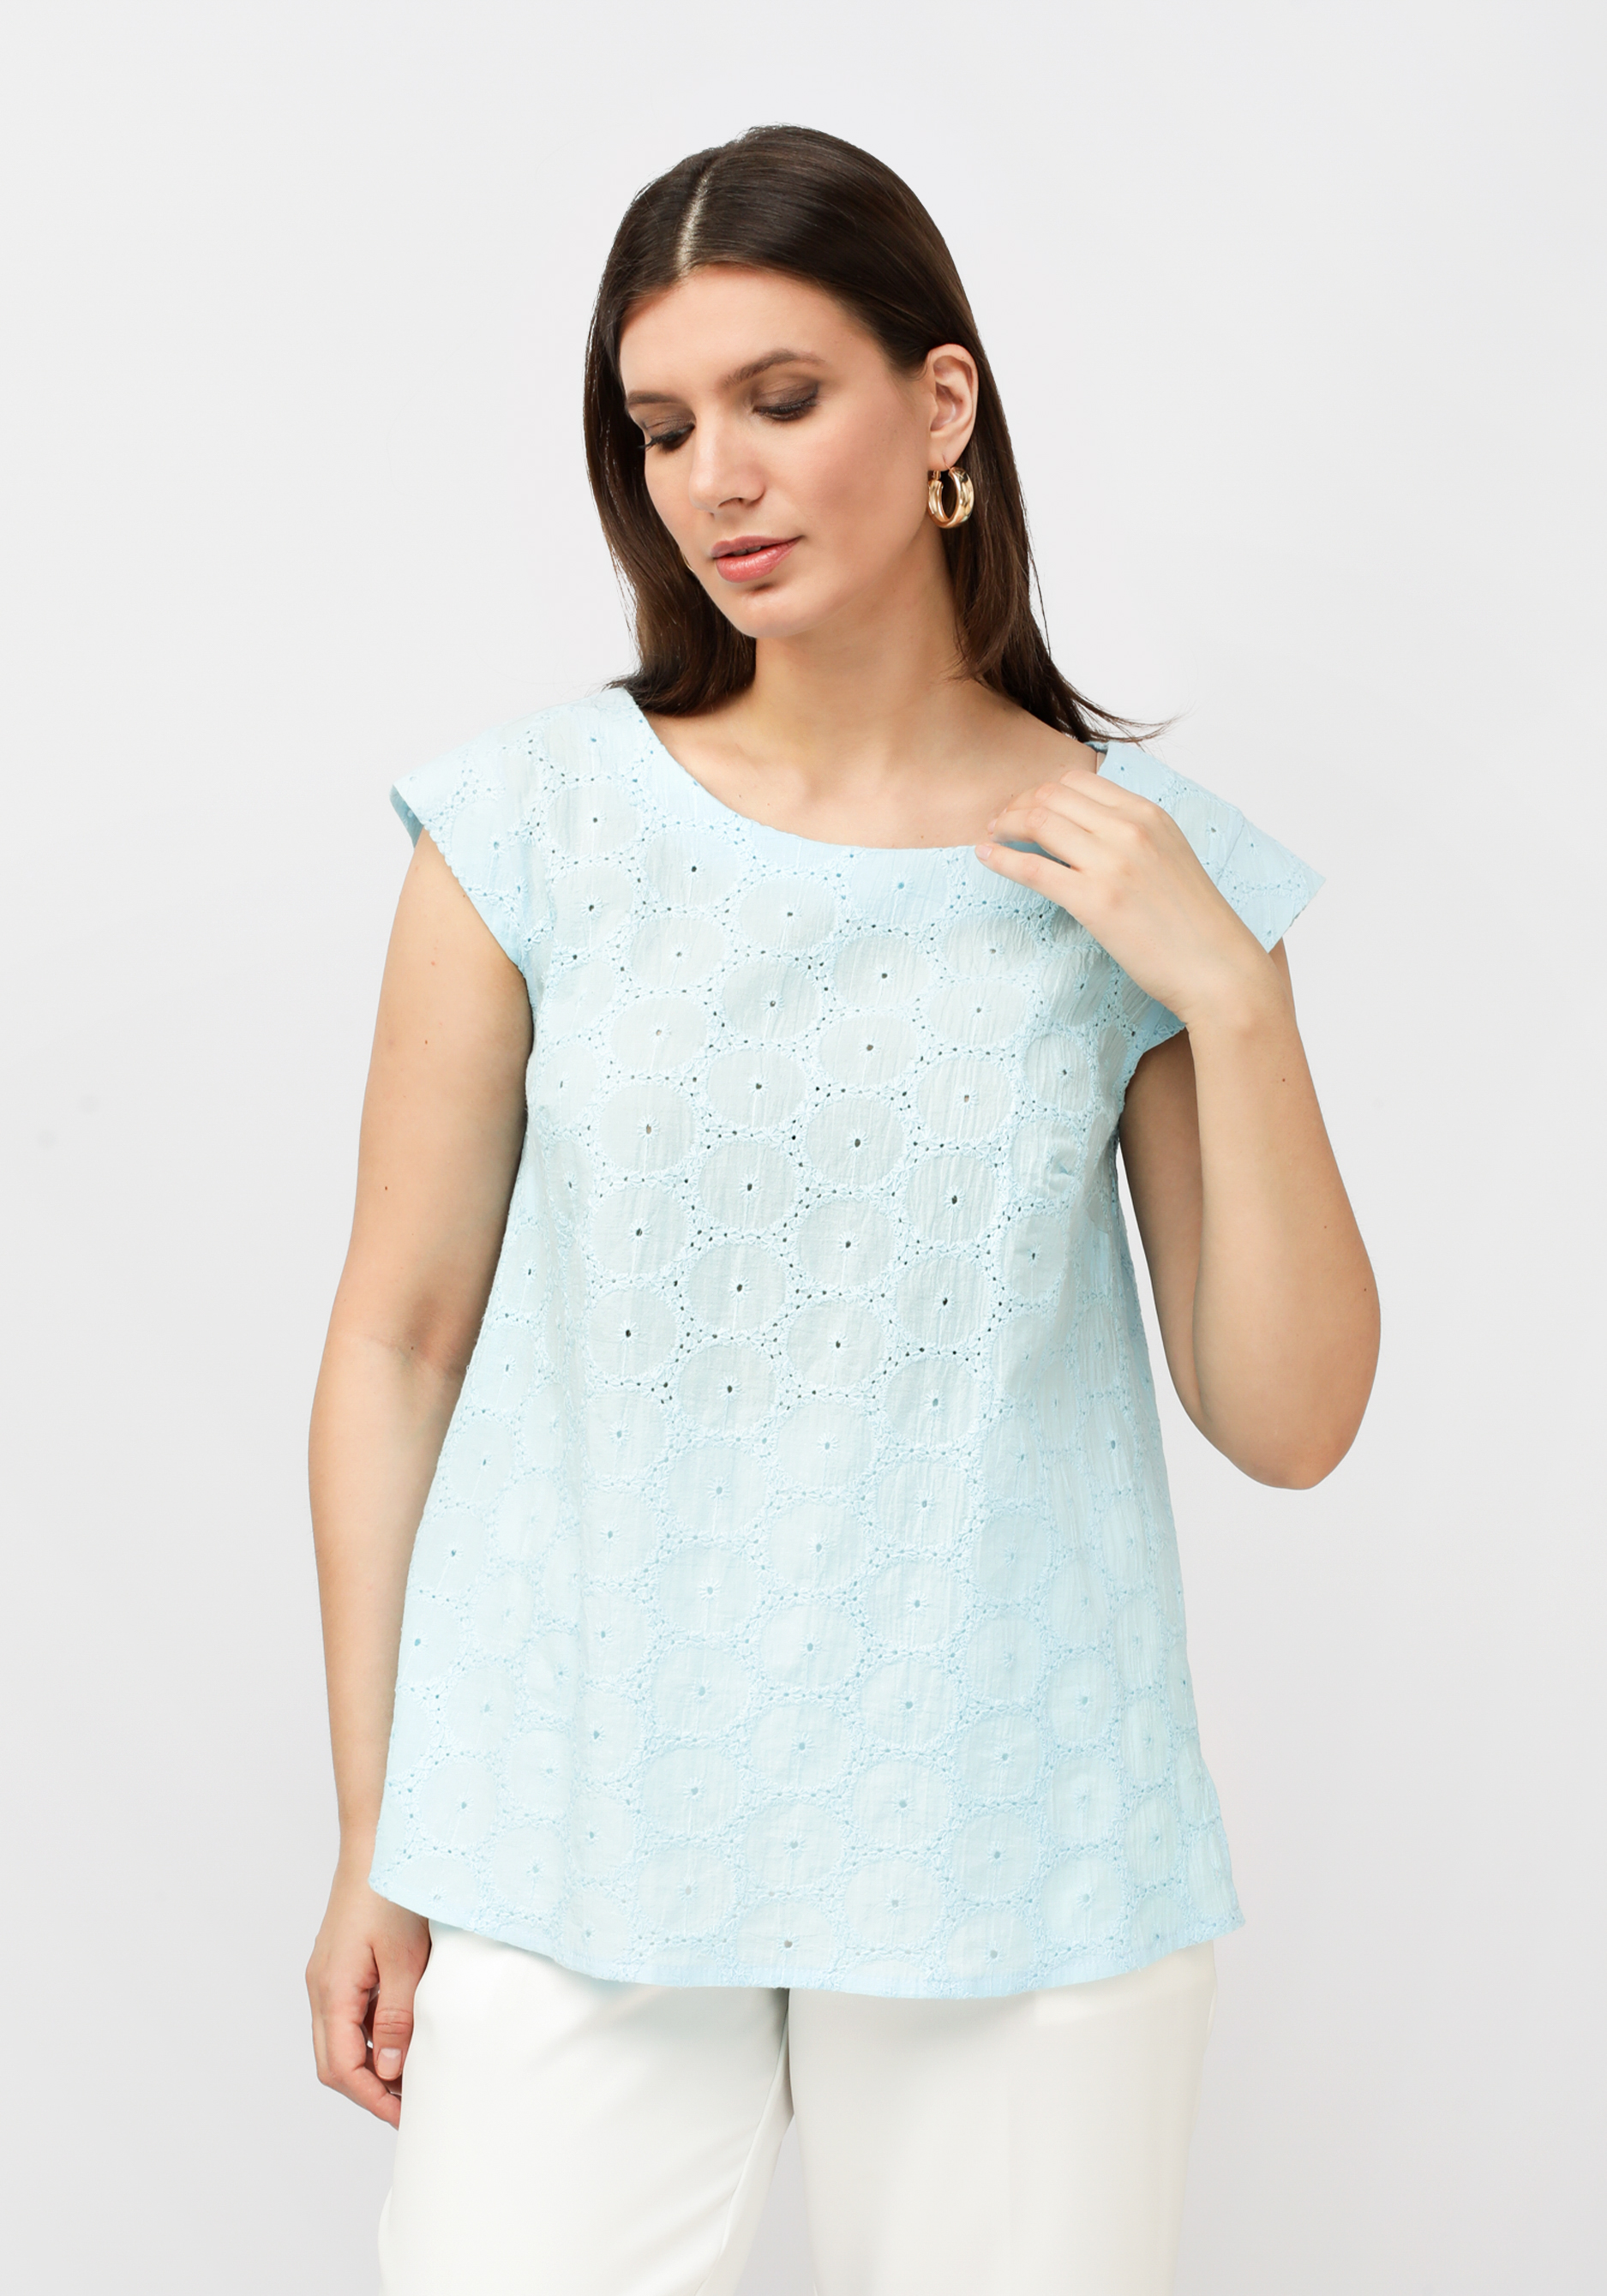 Блуза с ажурным рисунком ткани